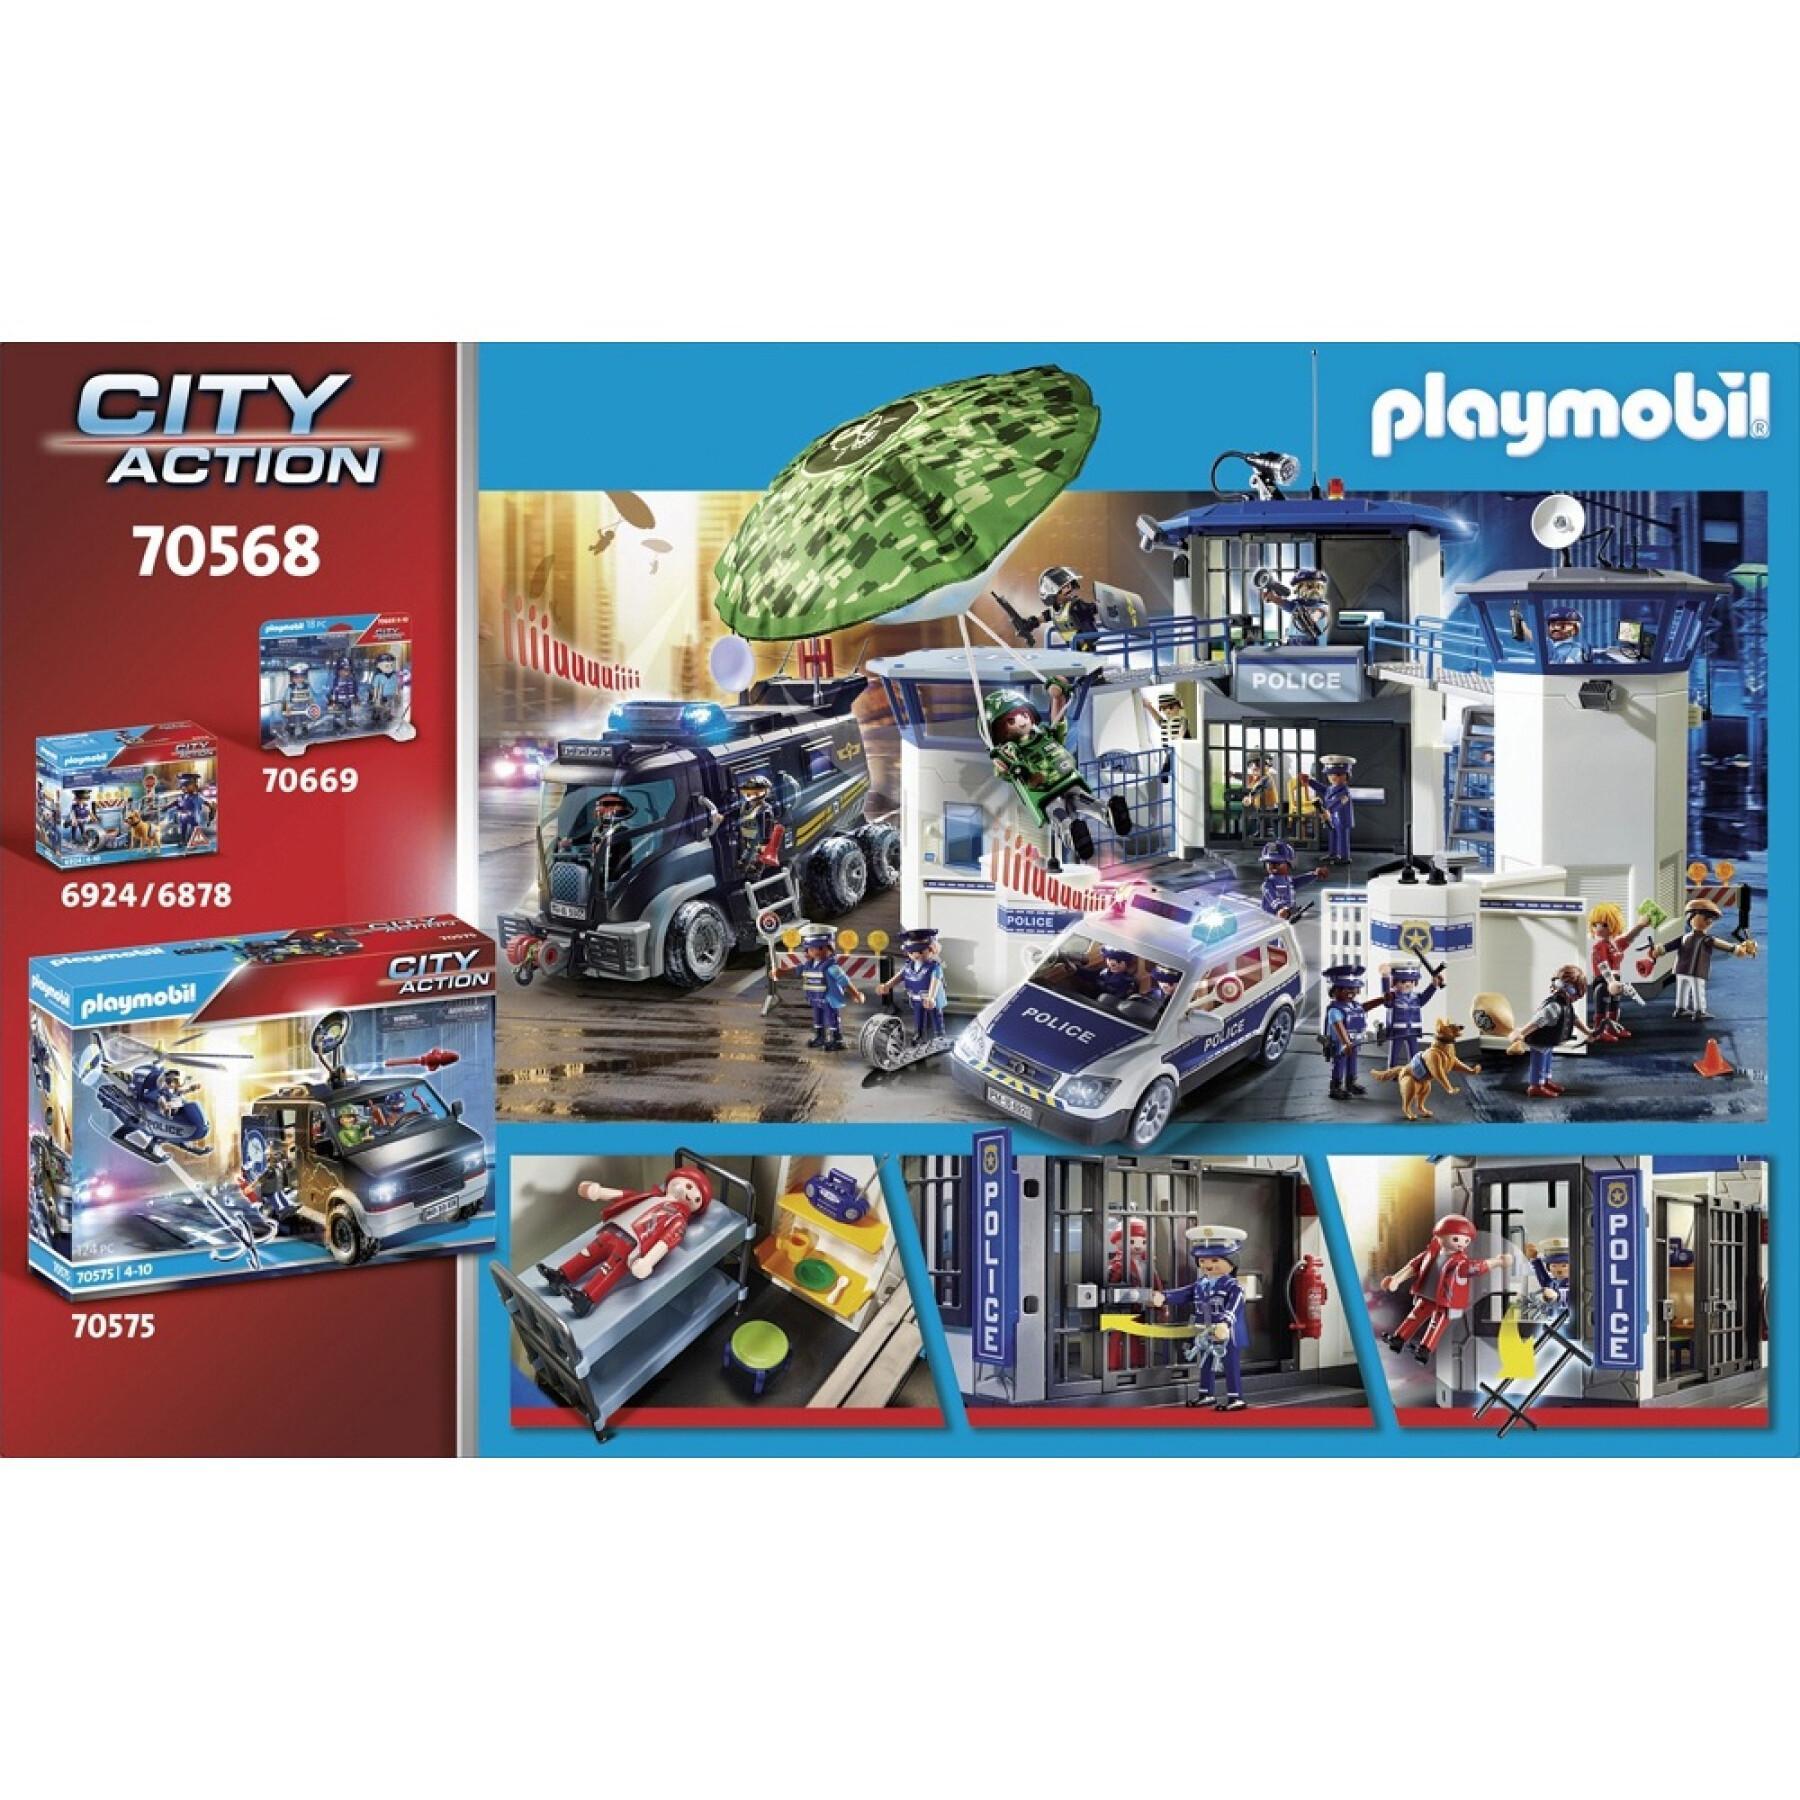 Police station and burglar Playmobil